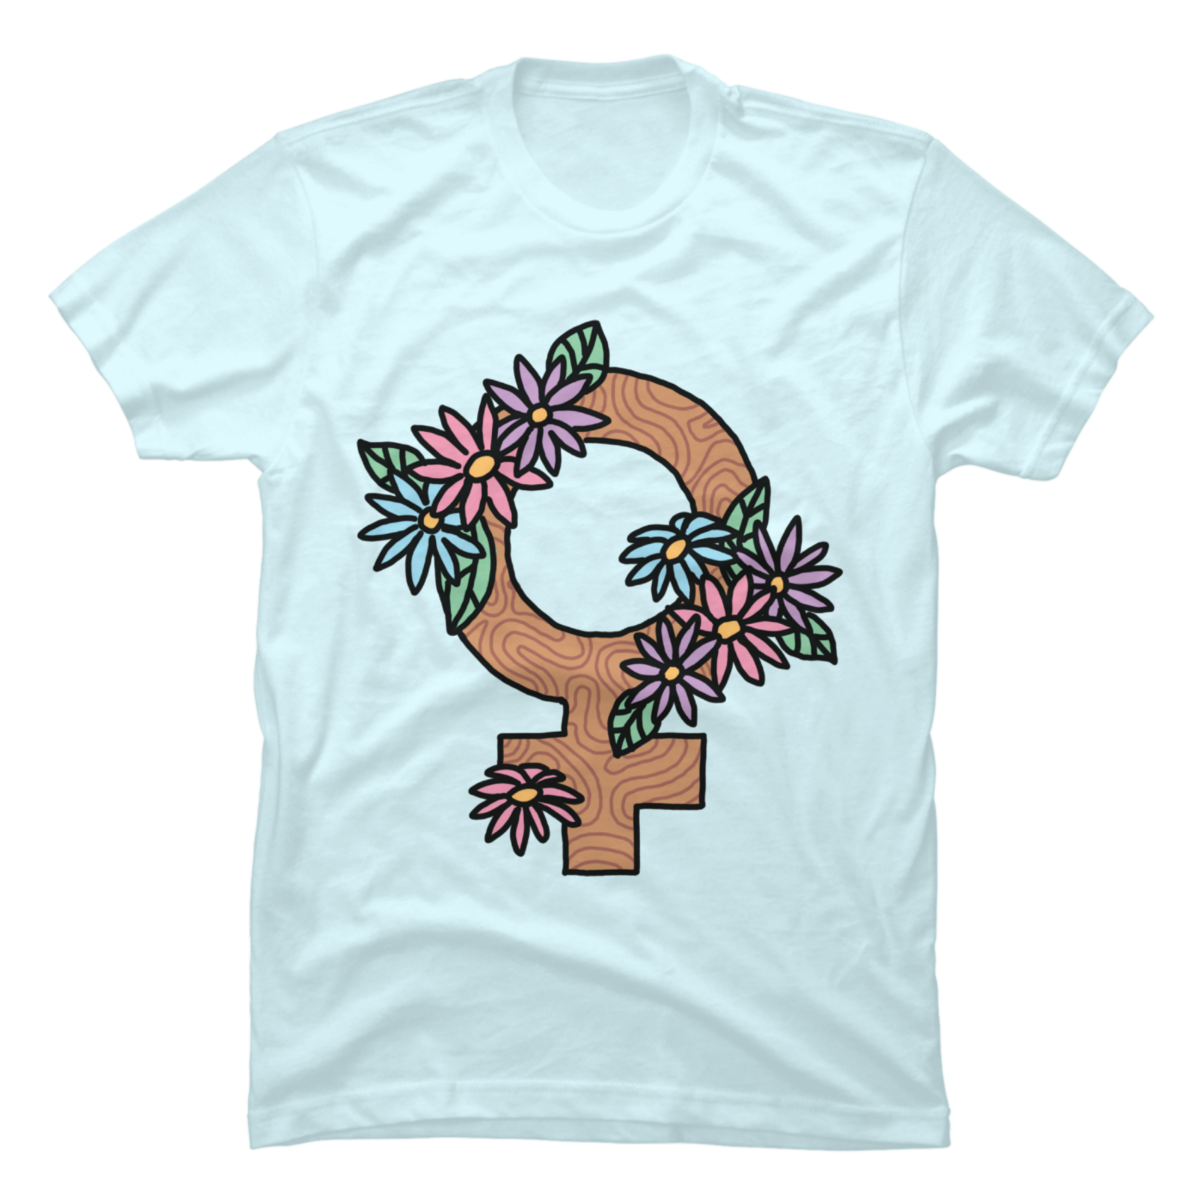 feminist symbol shirt